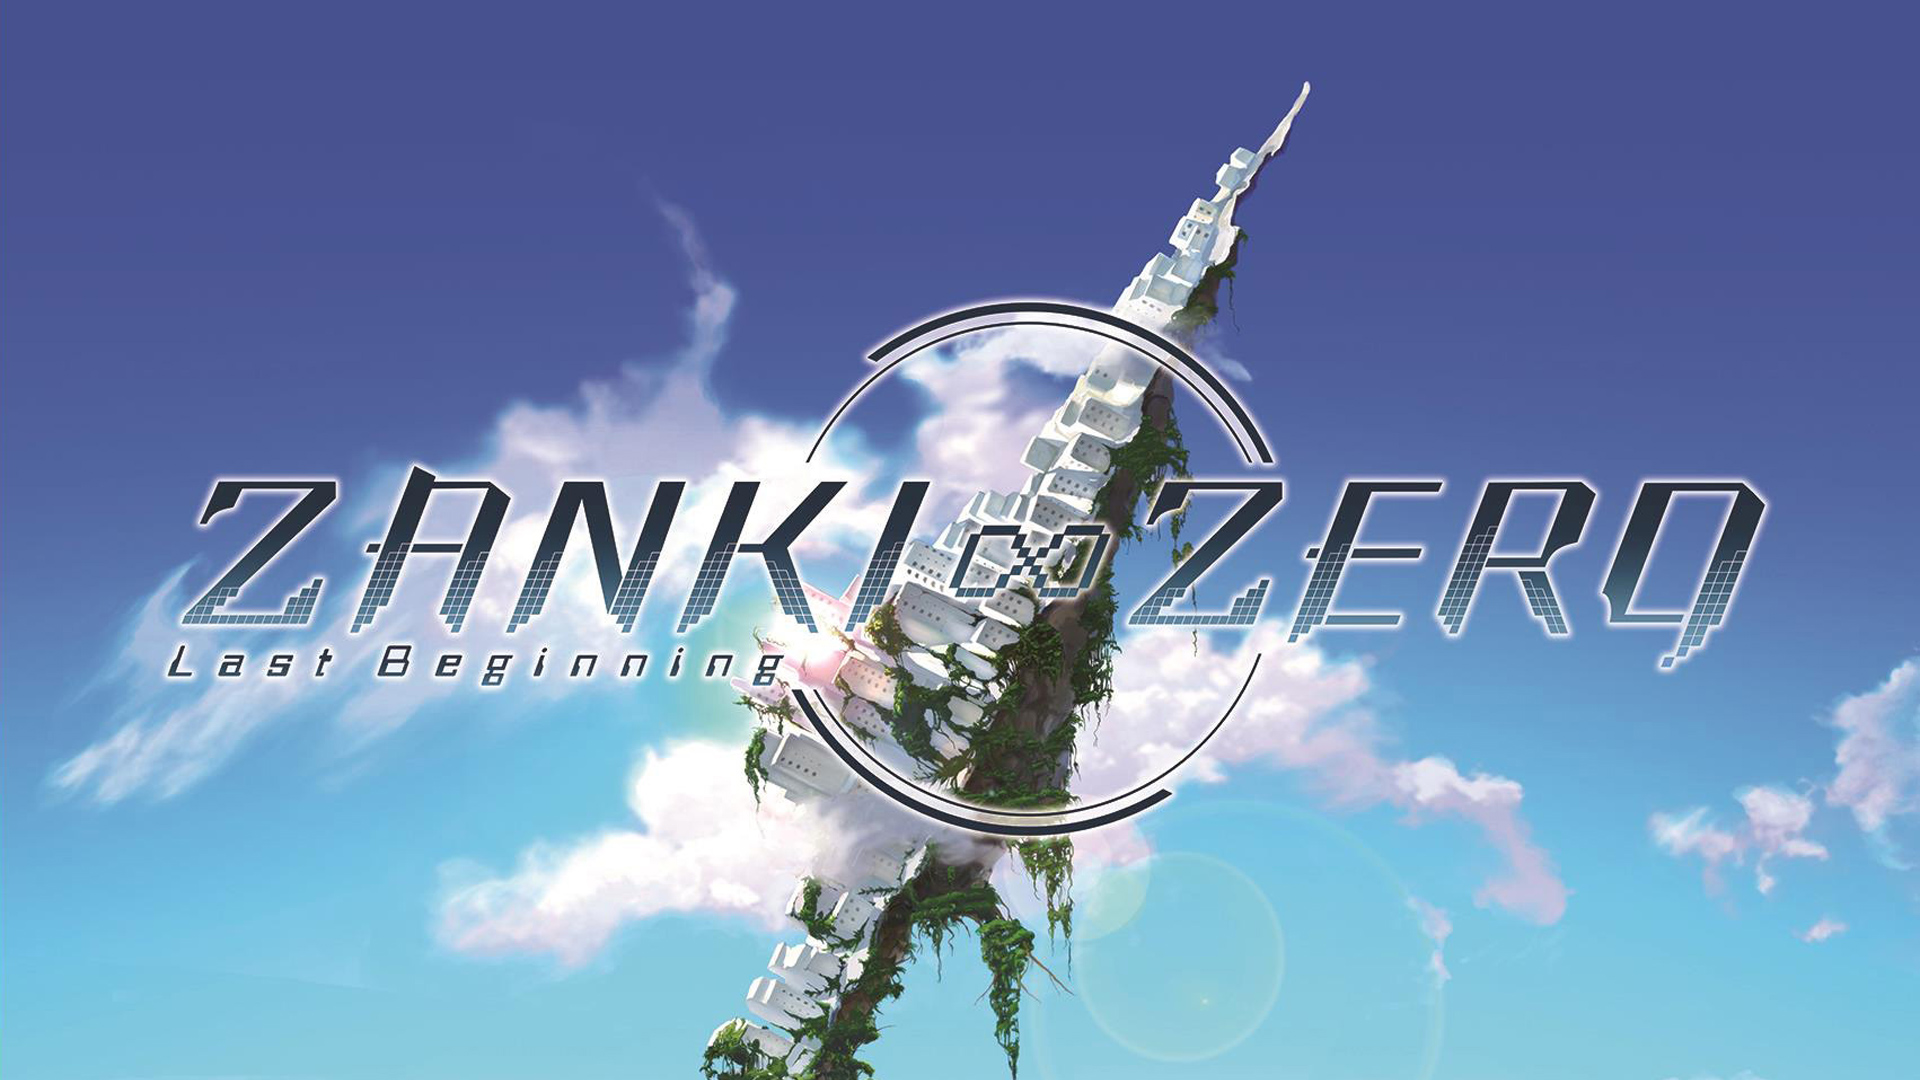 Game S Logo Wallpaper From Zanki Zero Last Beginning